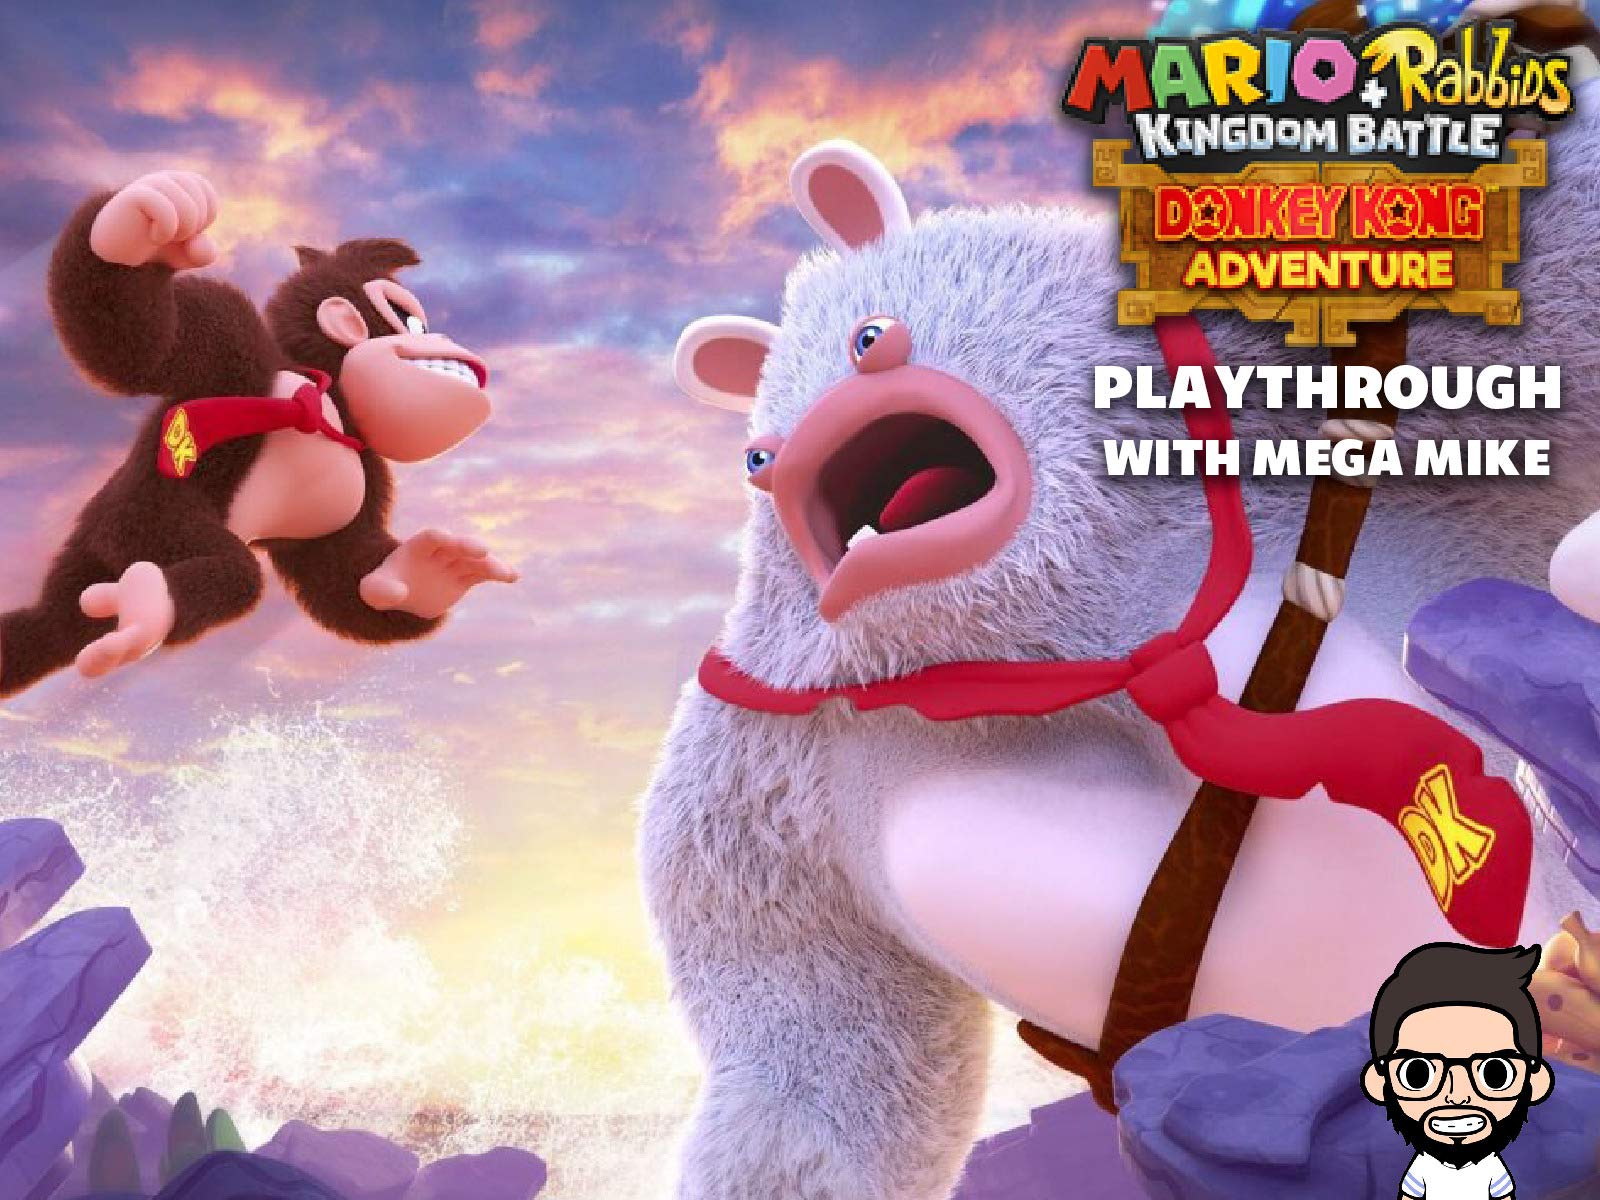 Amazon Watch Mario Rabbids Kingdom Battle Donkey Kong